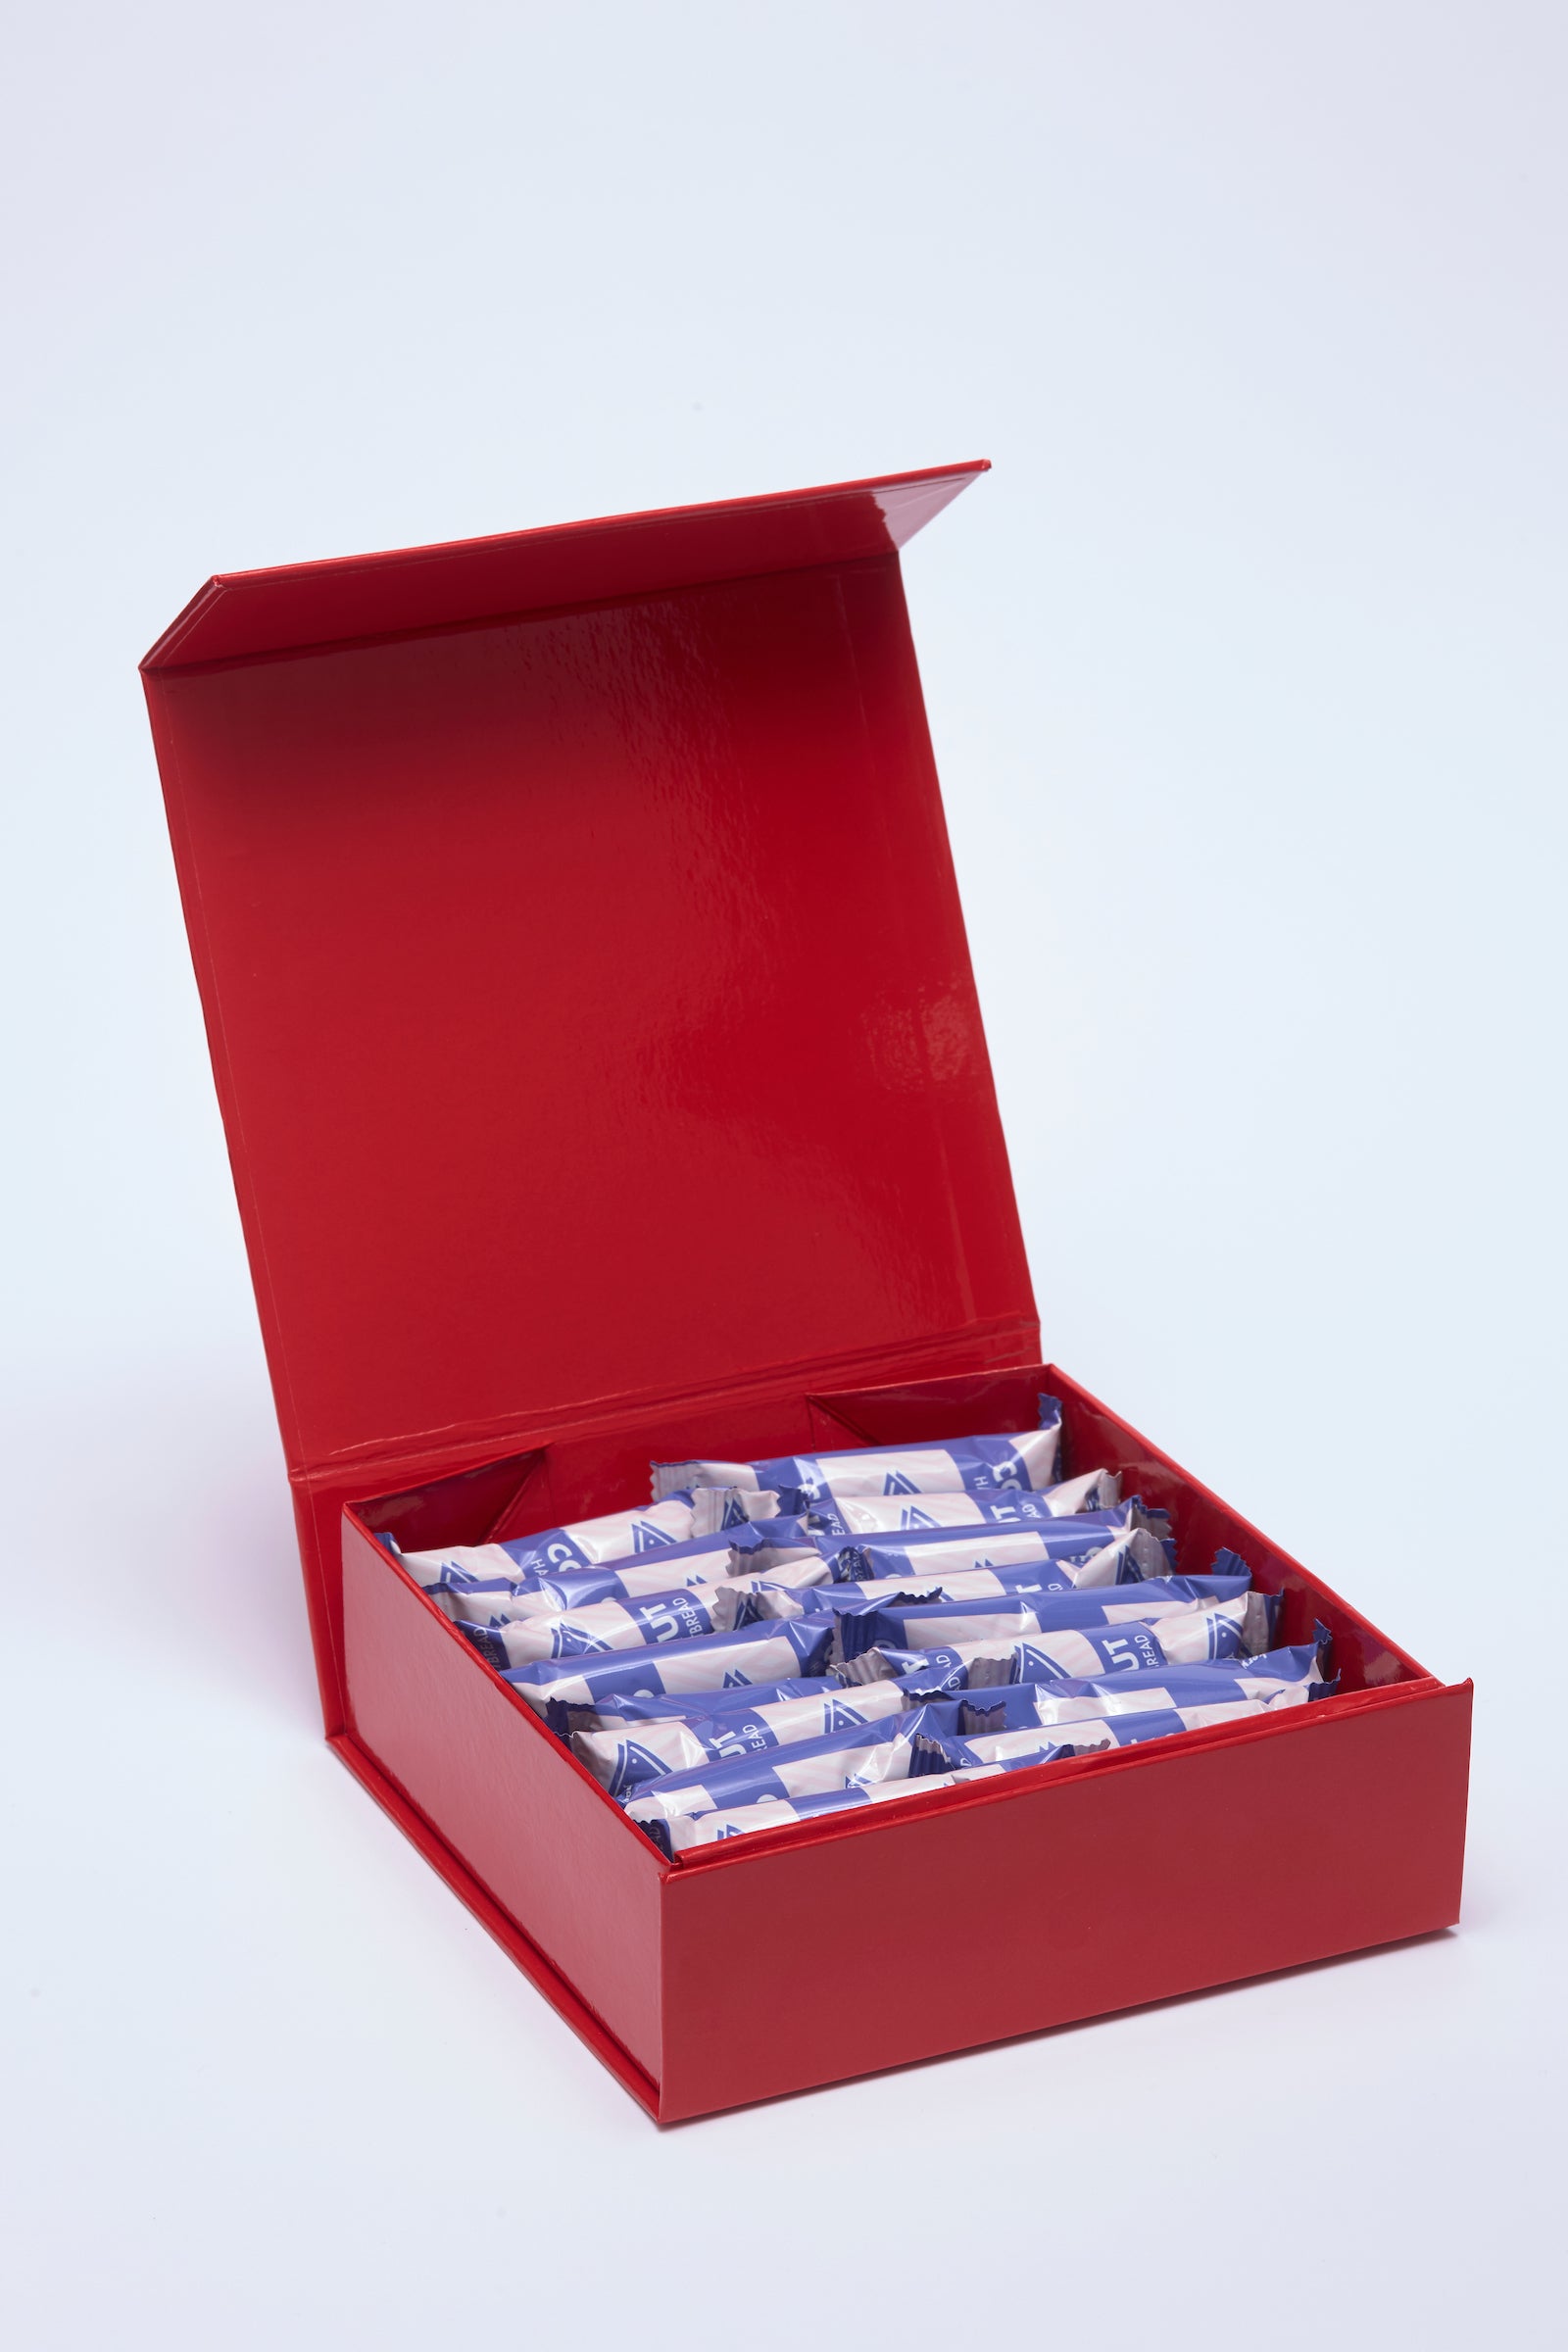 Brand Mack Jakors come with full box 🤩🤩 - House of Diamonds